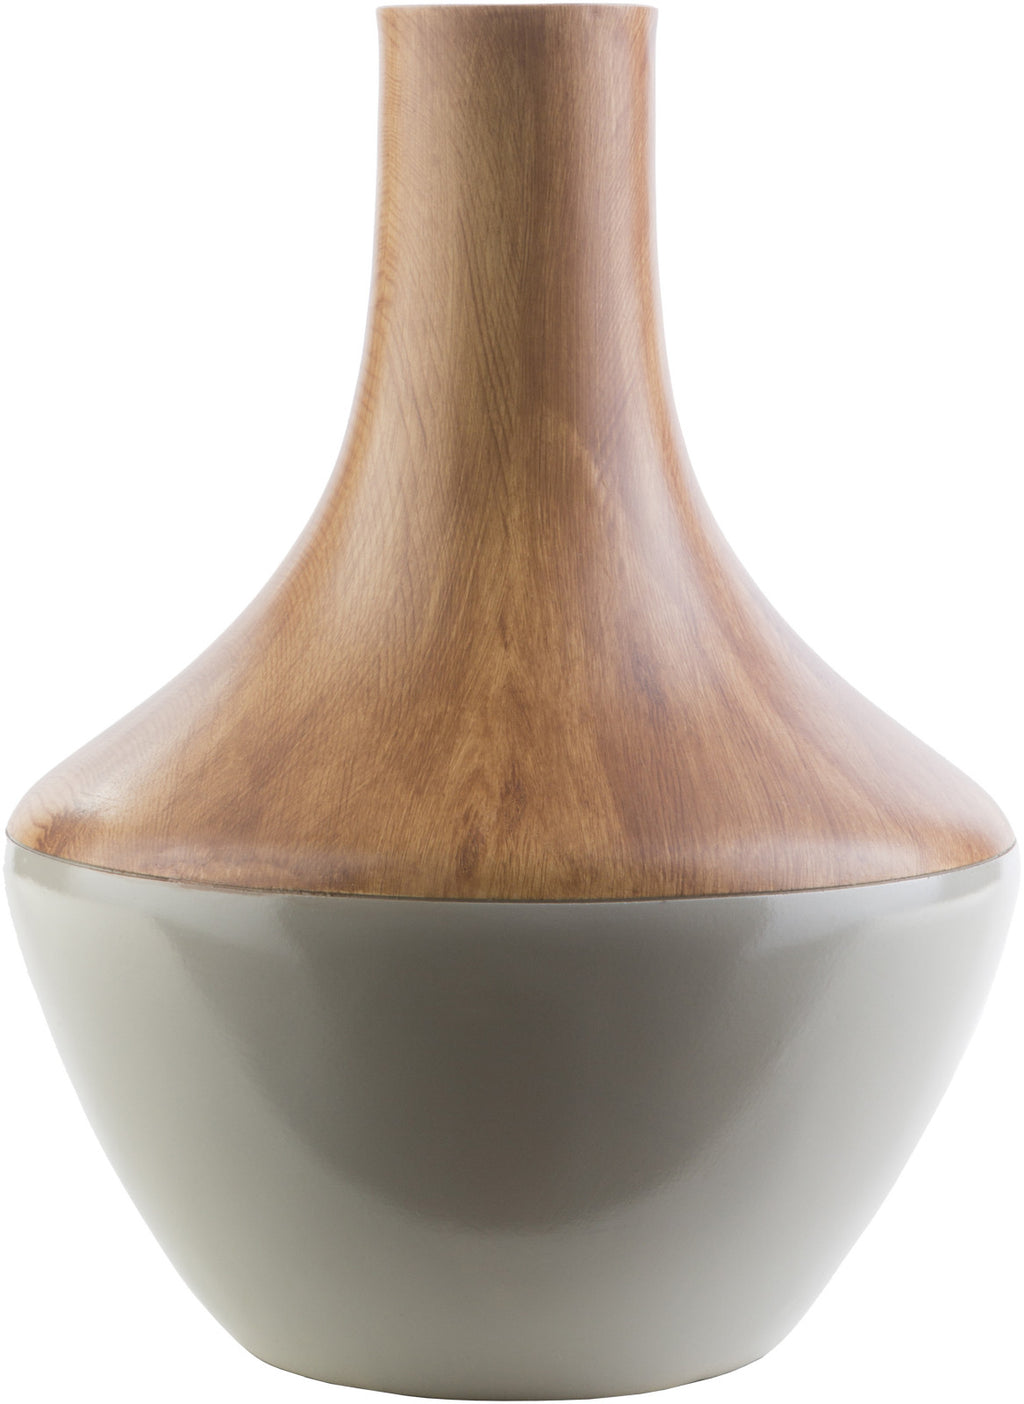 Surya Maddox MDX-552 Vase Small 9.12 X 9.12 X 12 inches